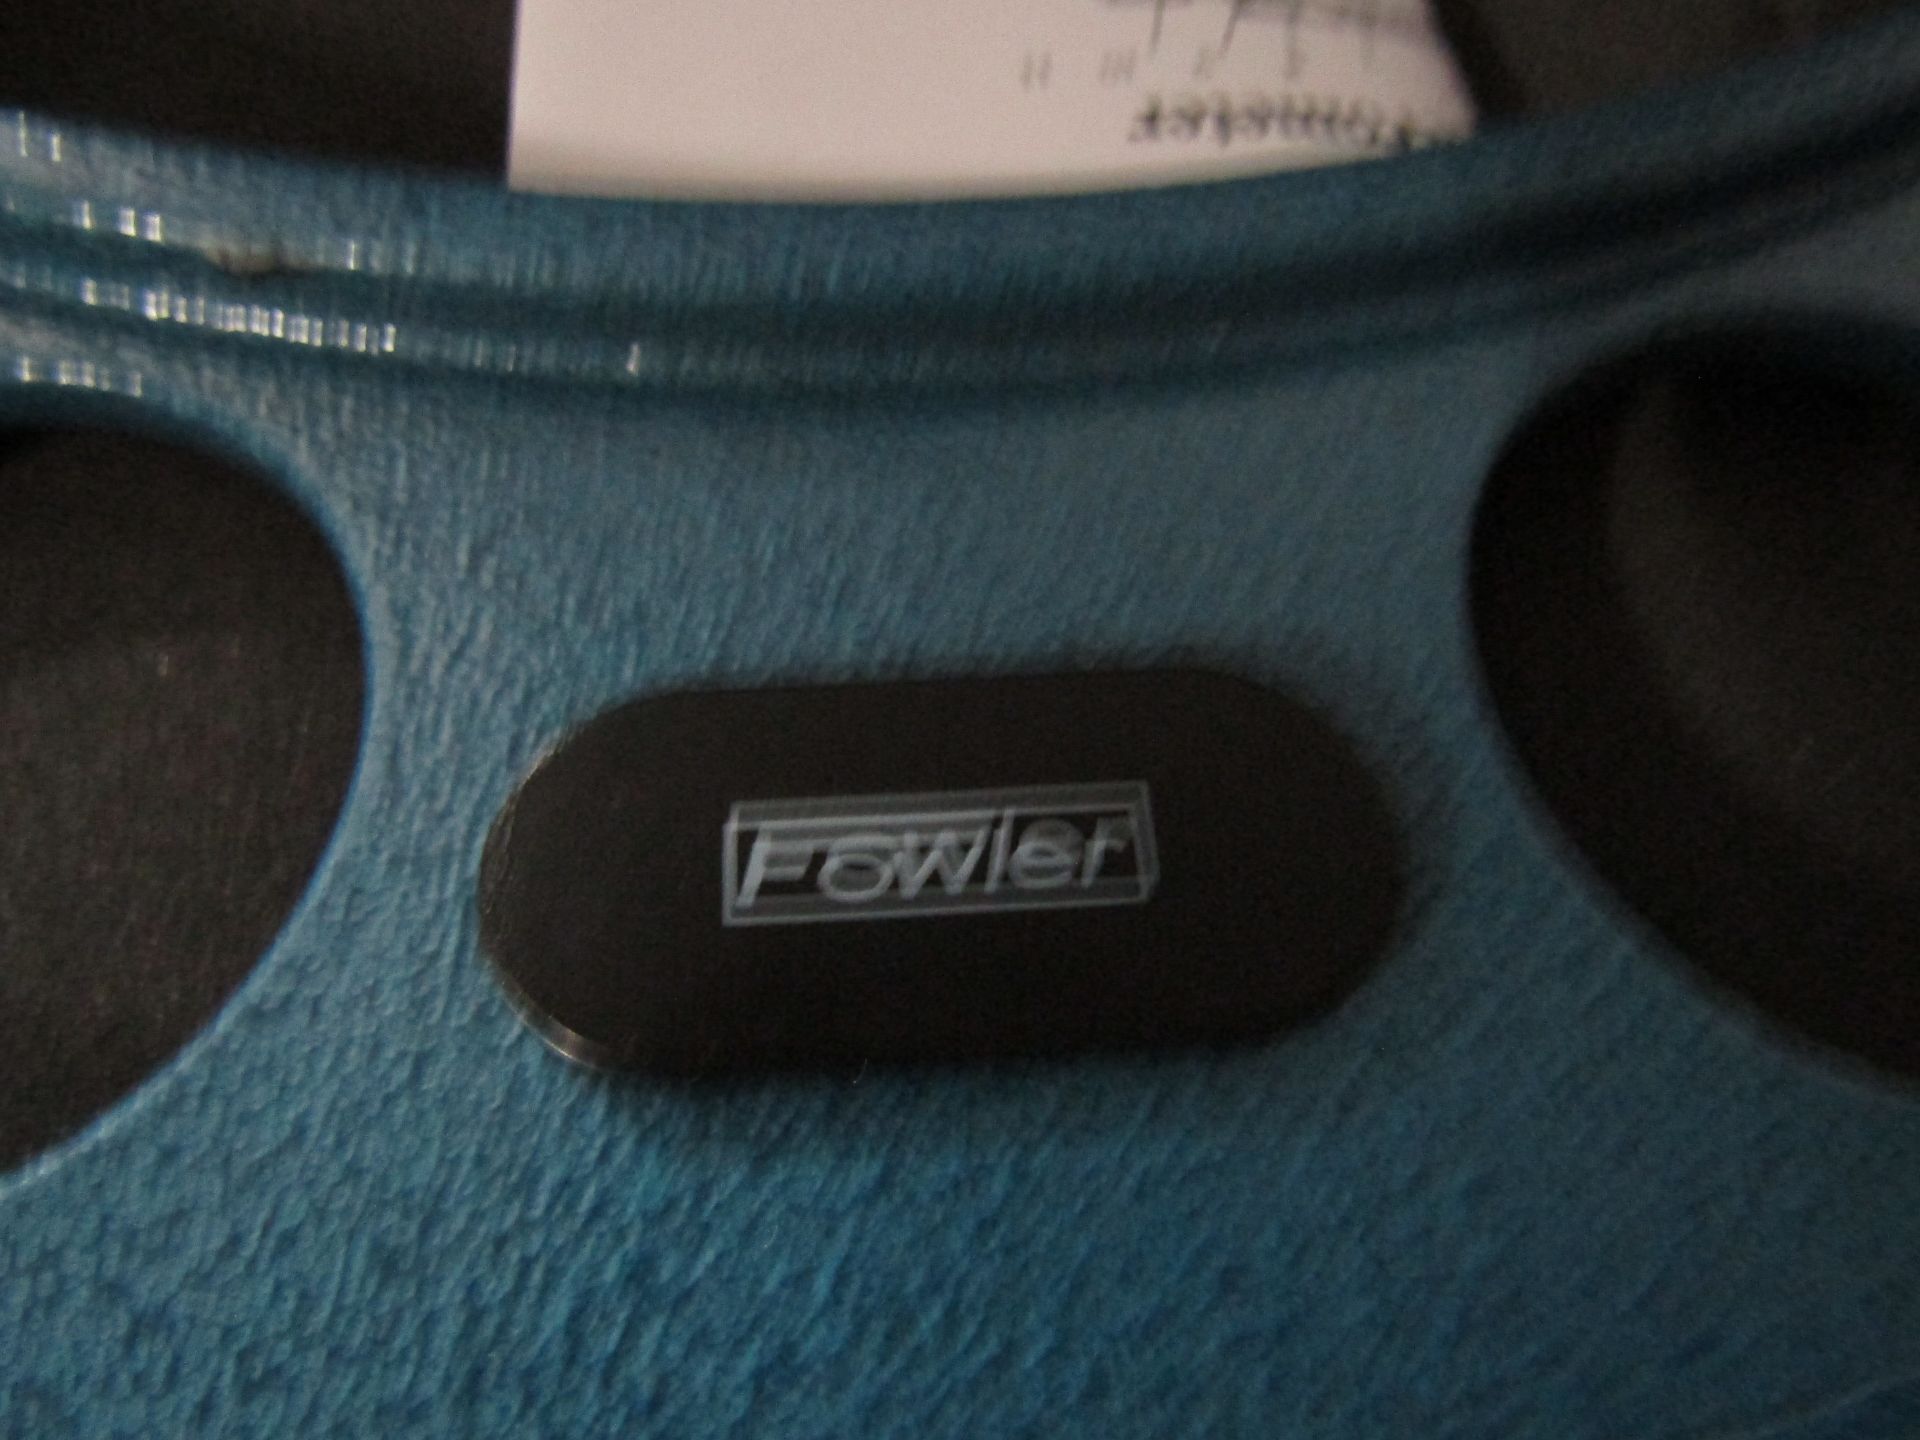 FOWLER Micrometers, Partial Set - Image 2 of 2